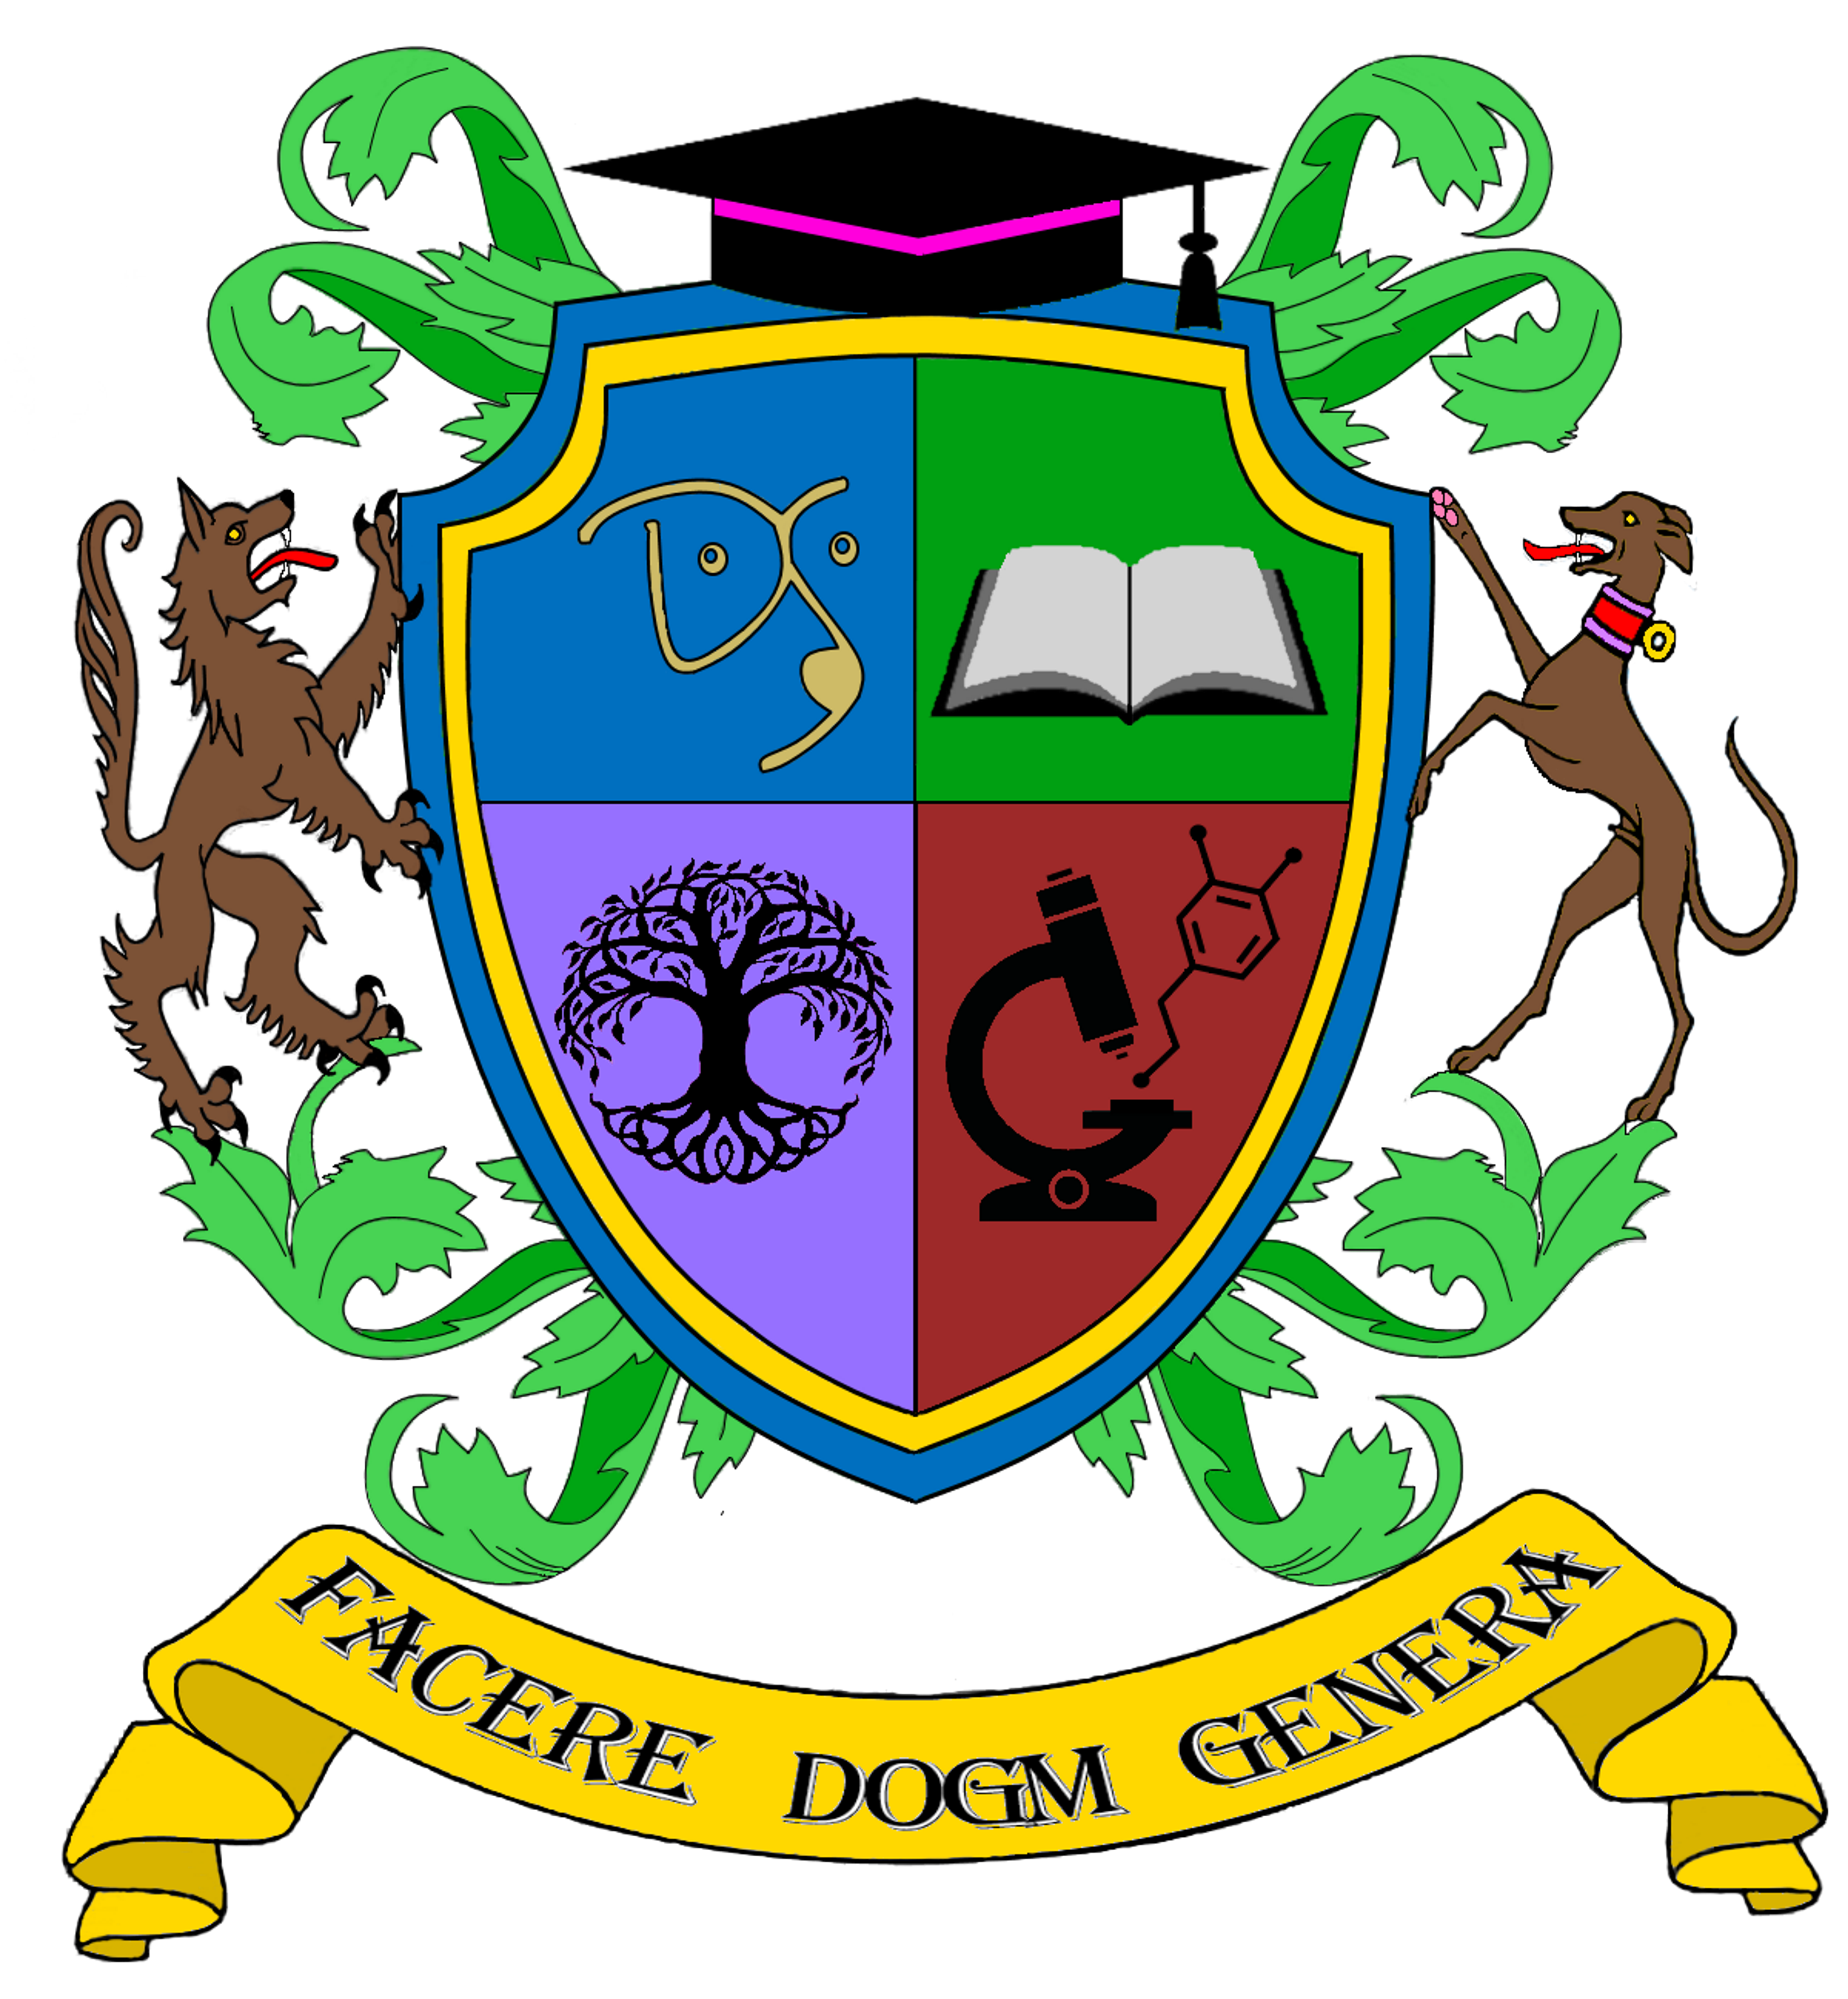 Dogue Academy crest